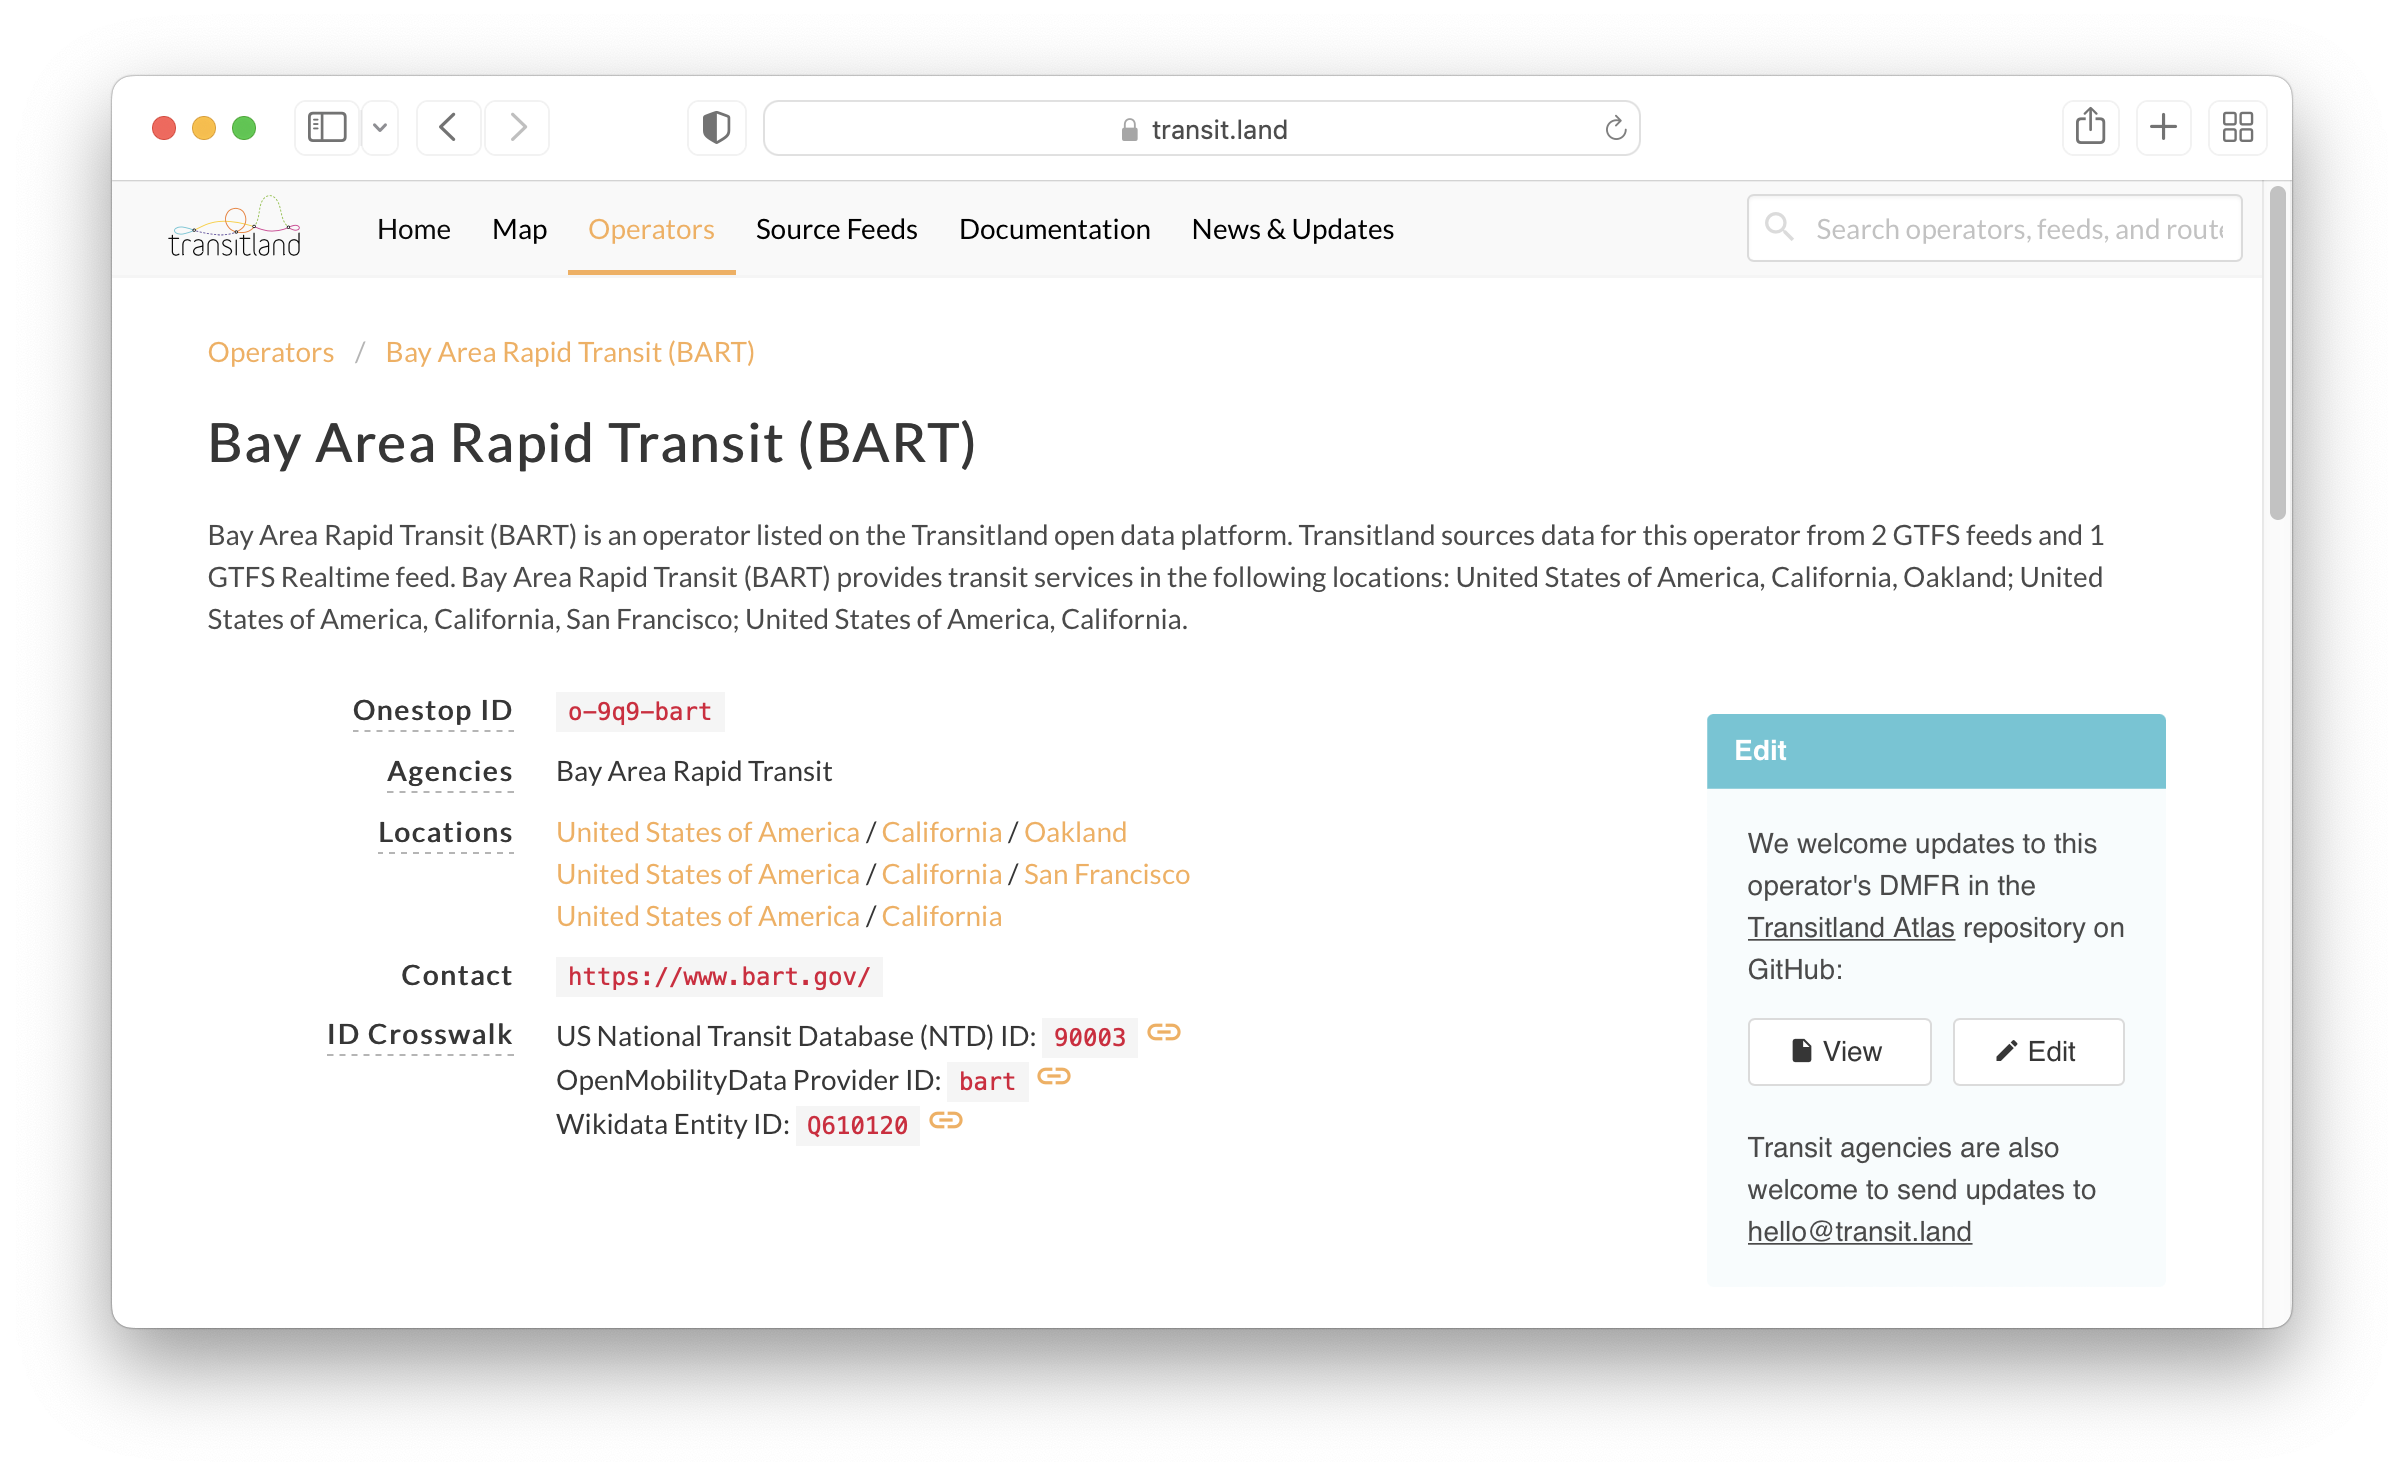 screenshot of BART operator detail page listing its US NTD ID